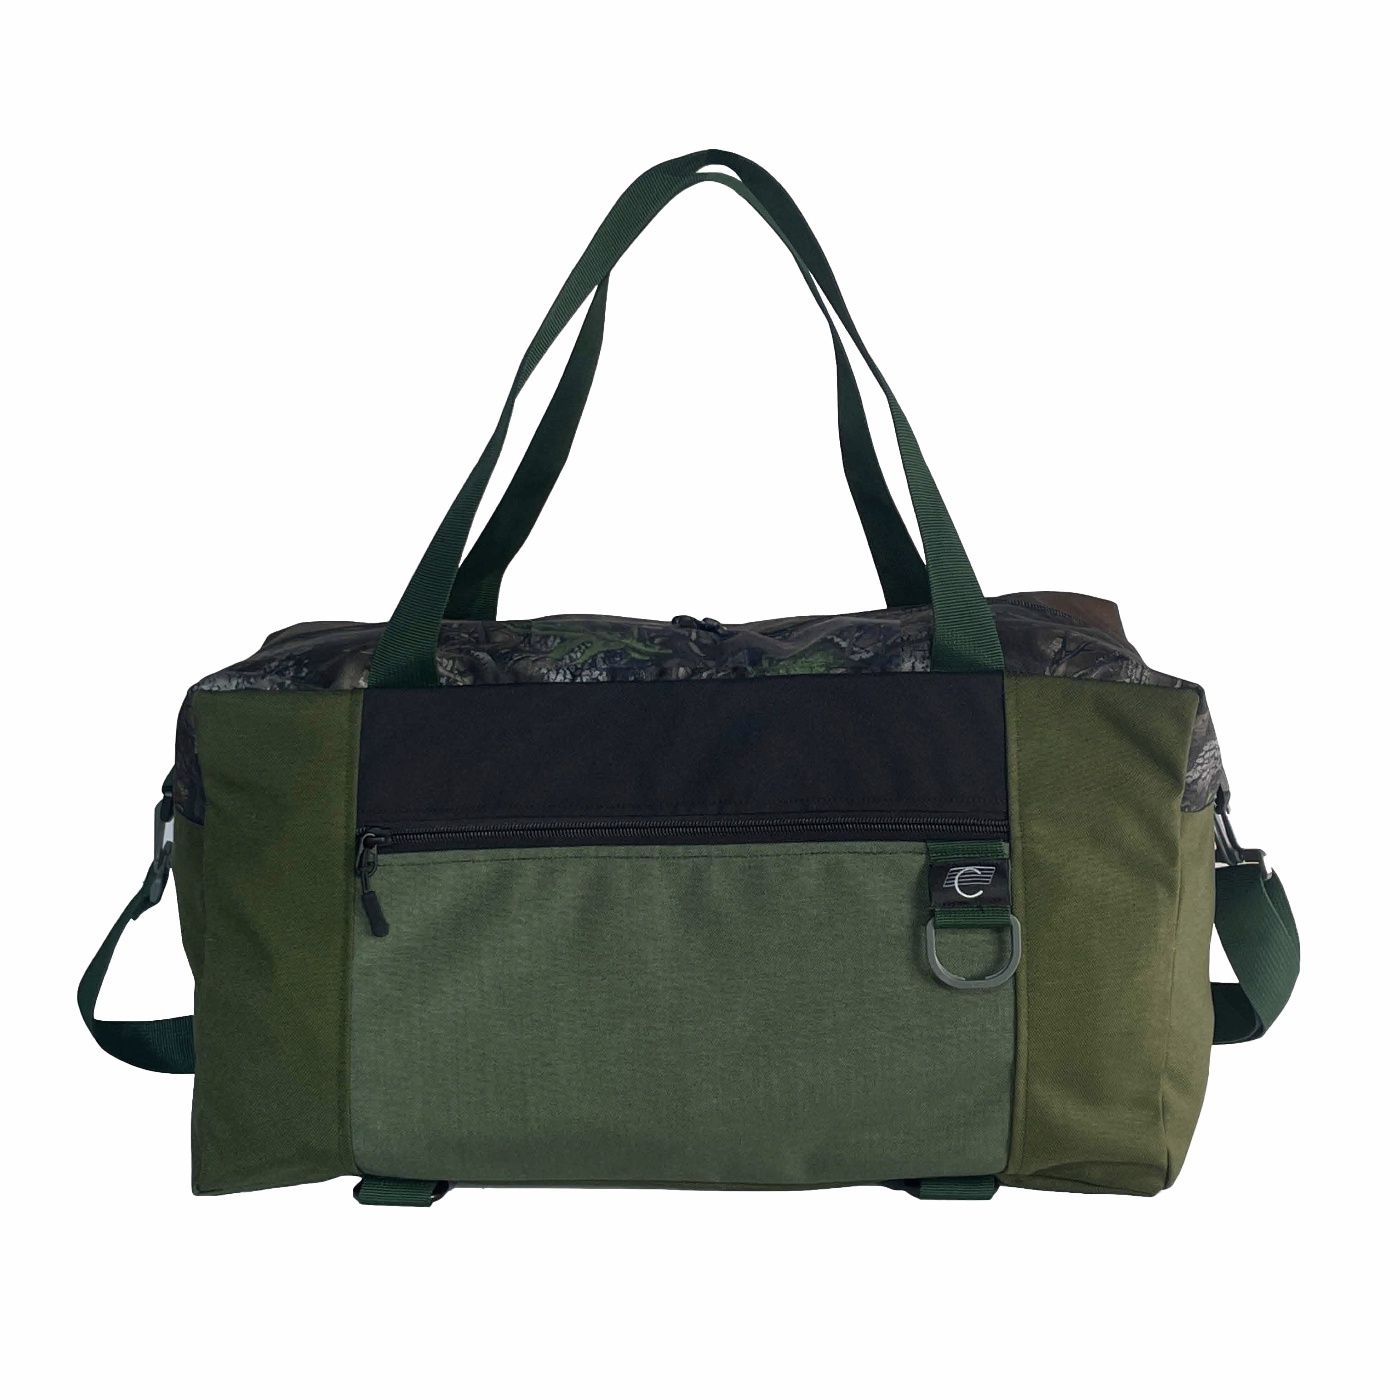 Coma Brand Coma Duffle Bag Mixed Greens/Camo Cordura